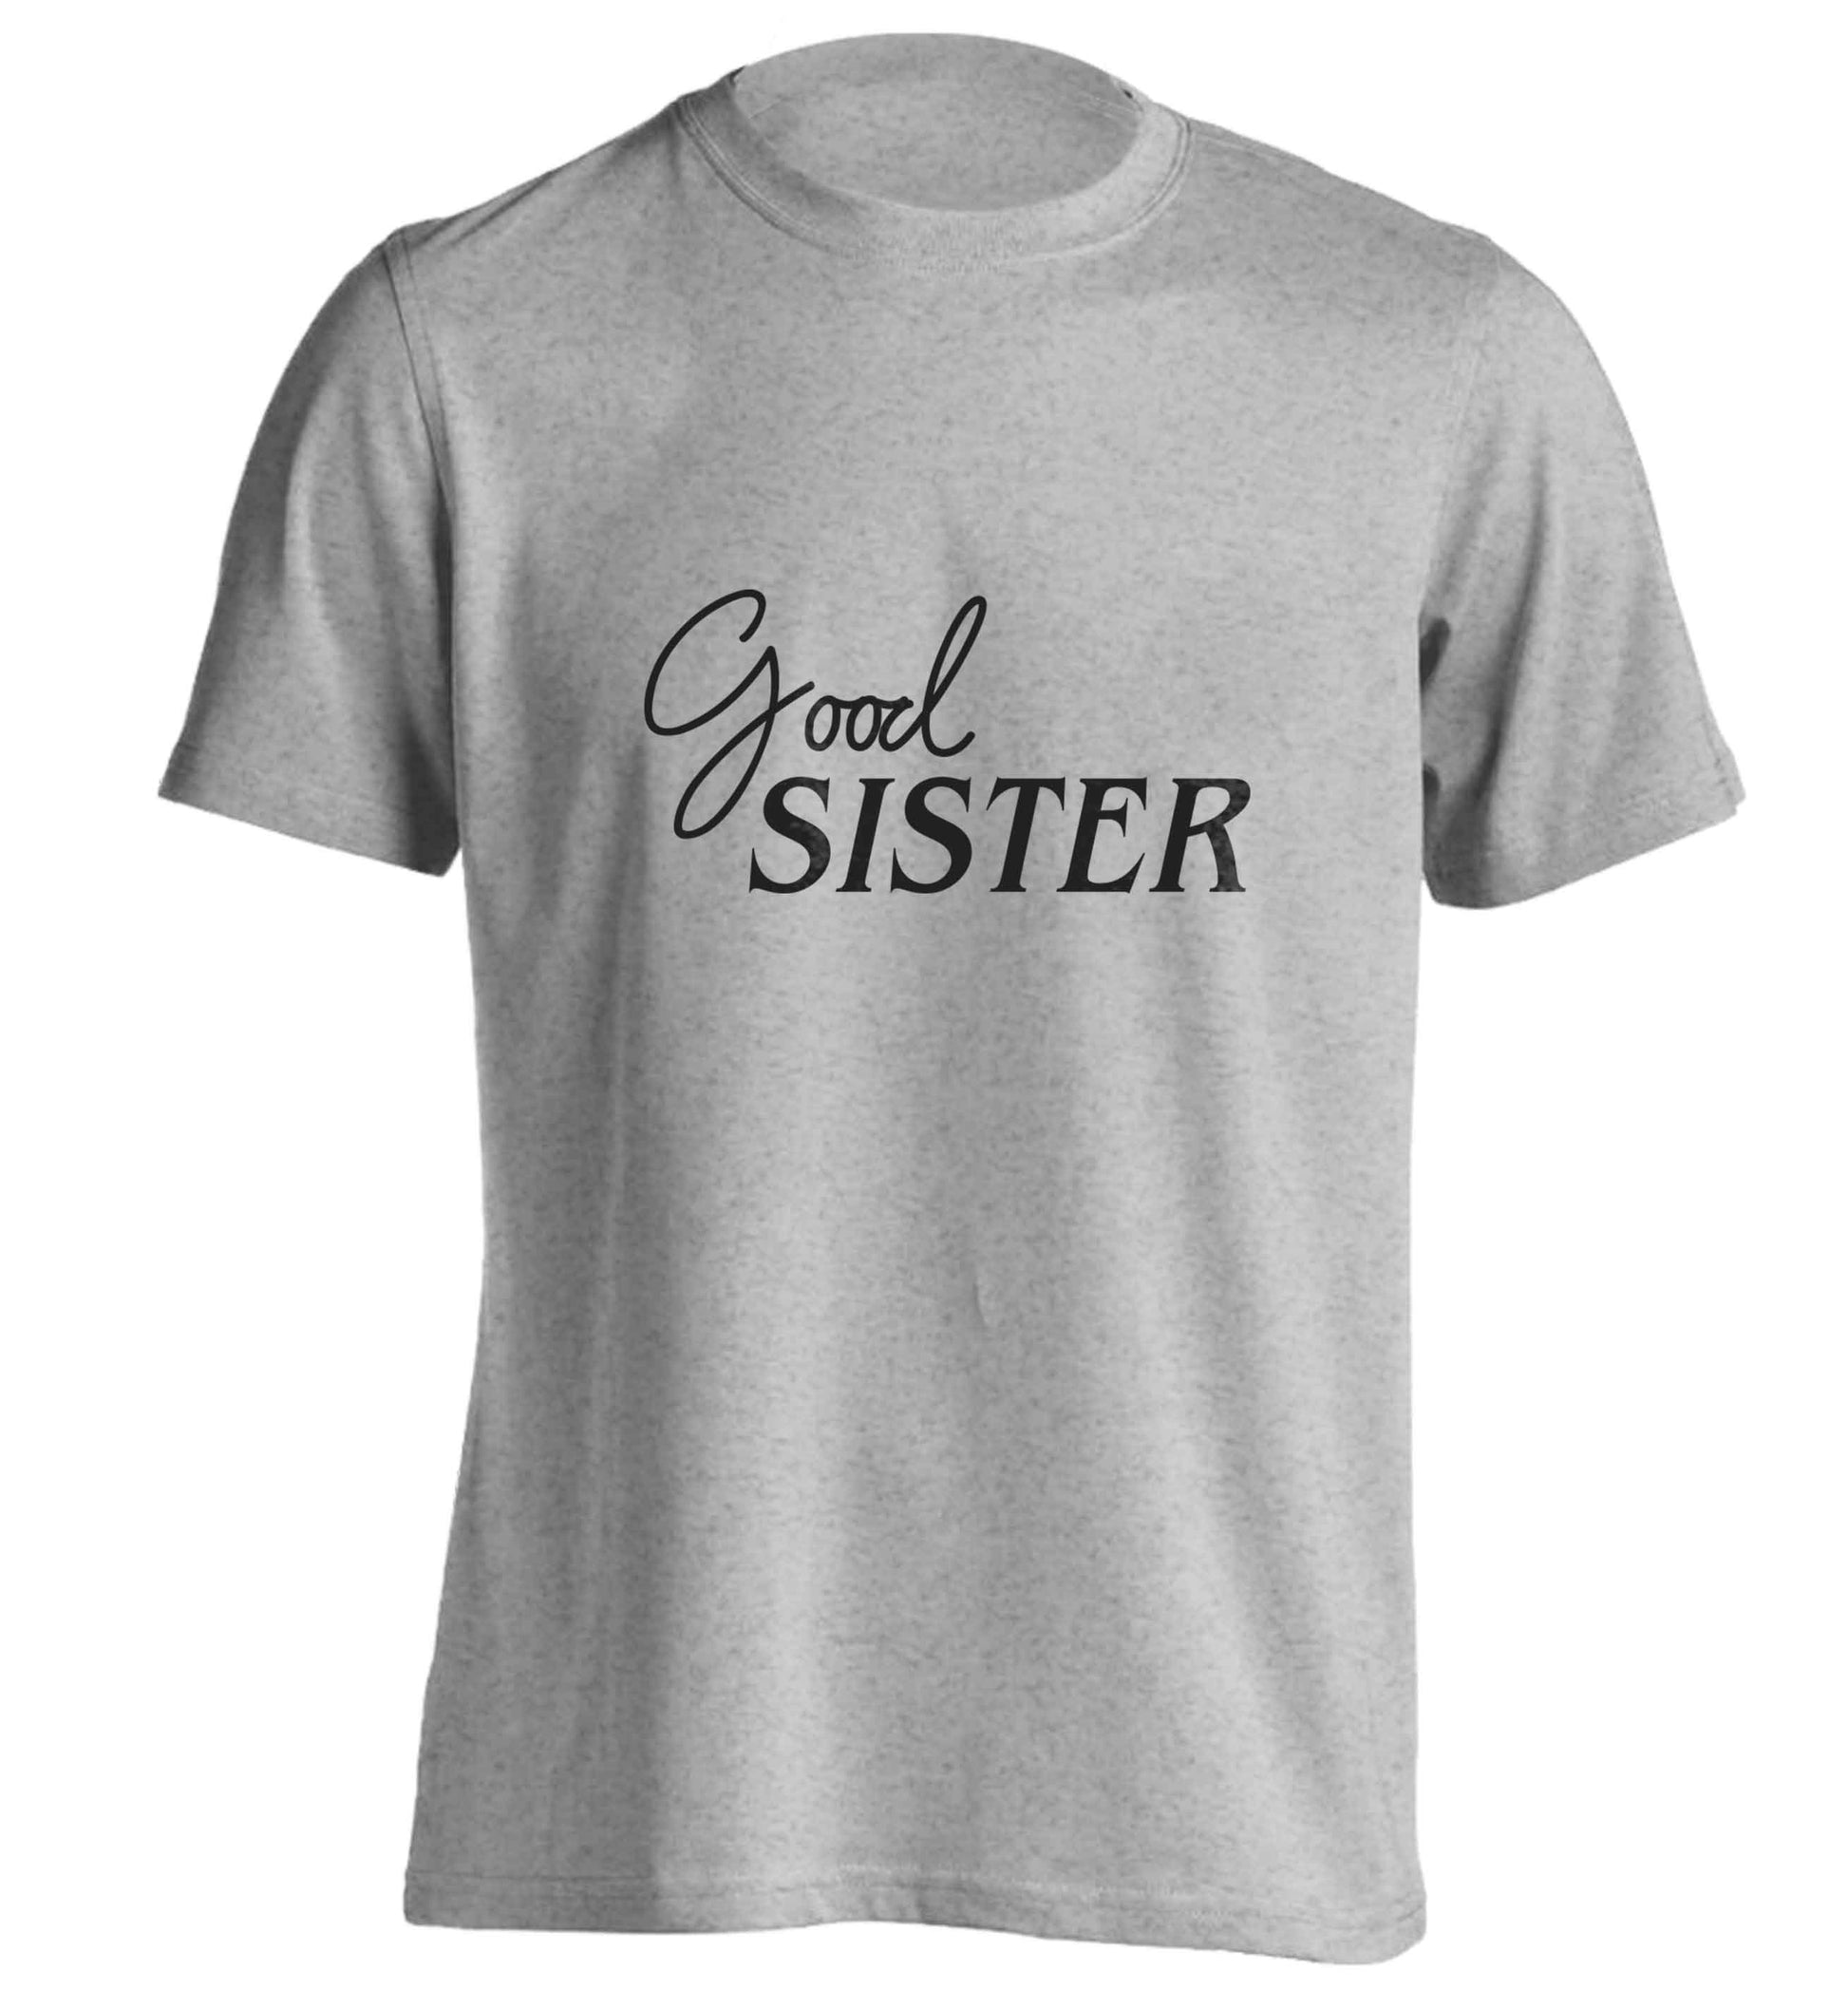 Good sister adults unisex grey Tshirt 2XL